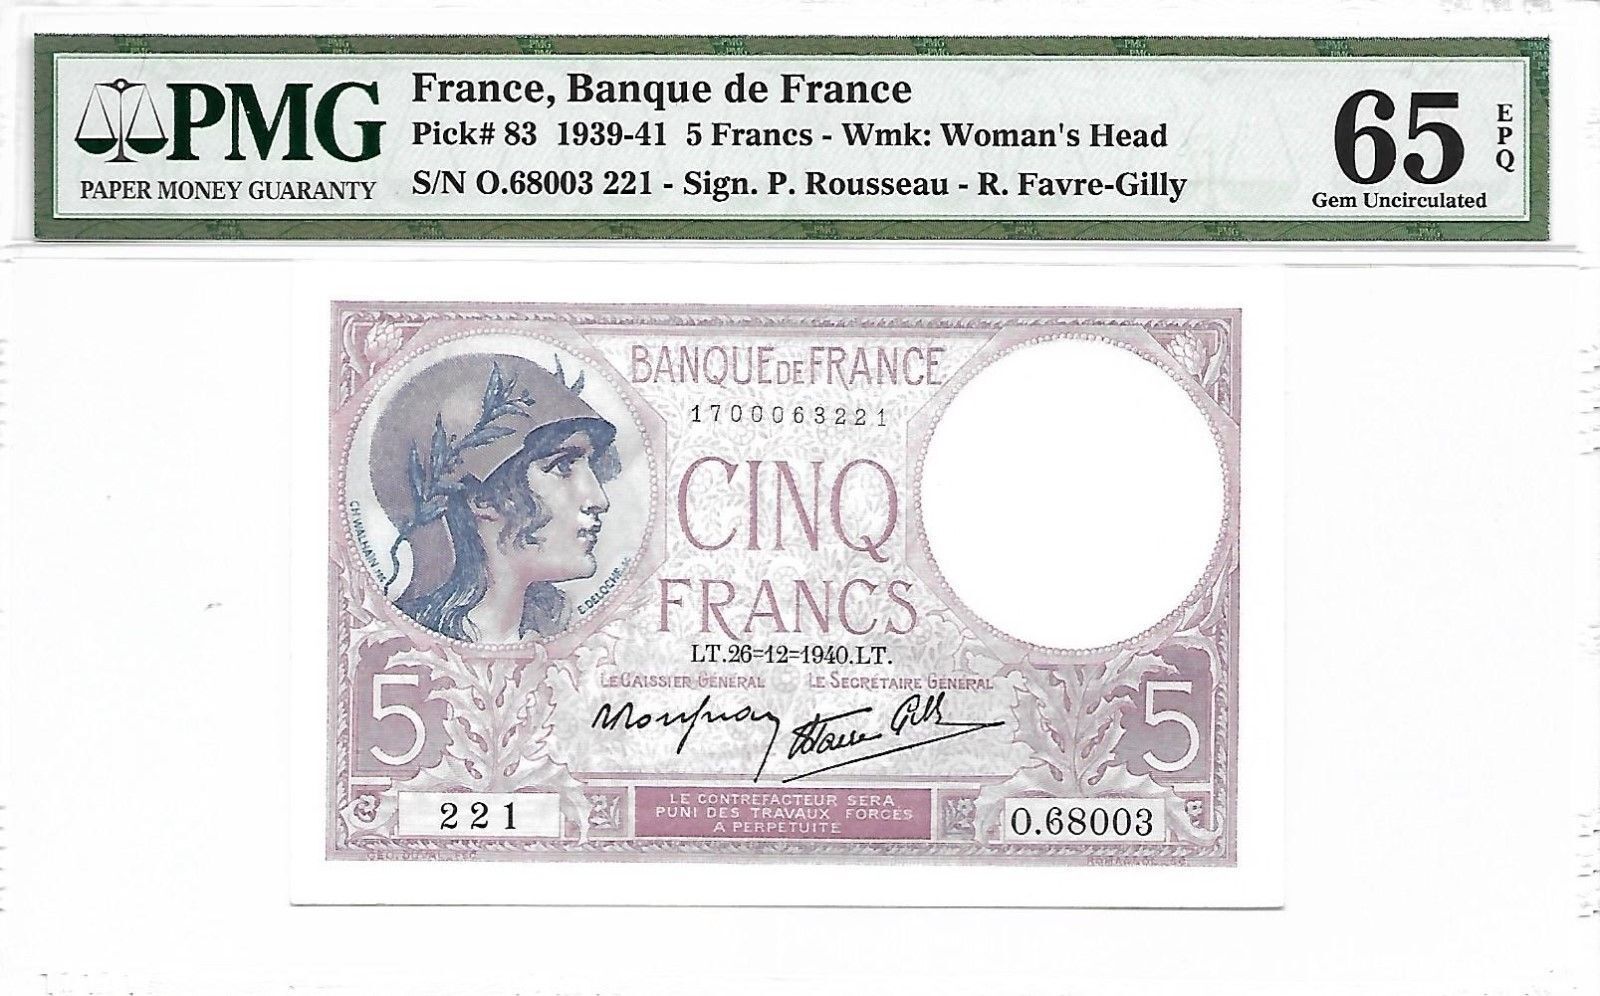 France, Banque de France - 5 Francs, 1940. LT. PMG 65 EPQ